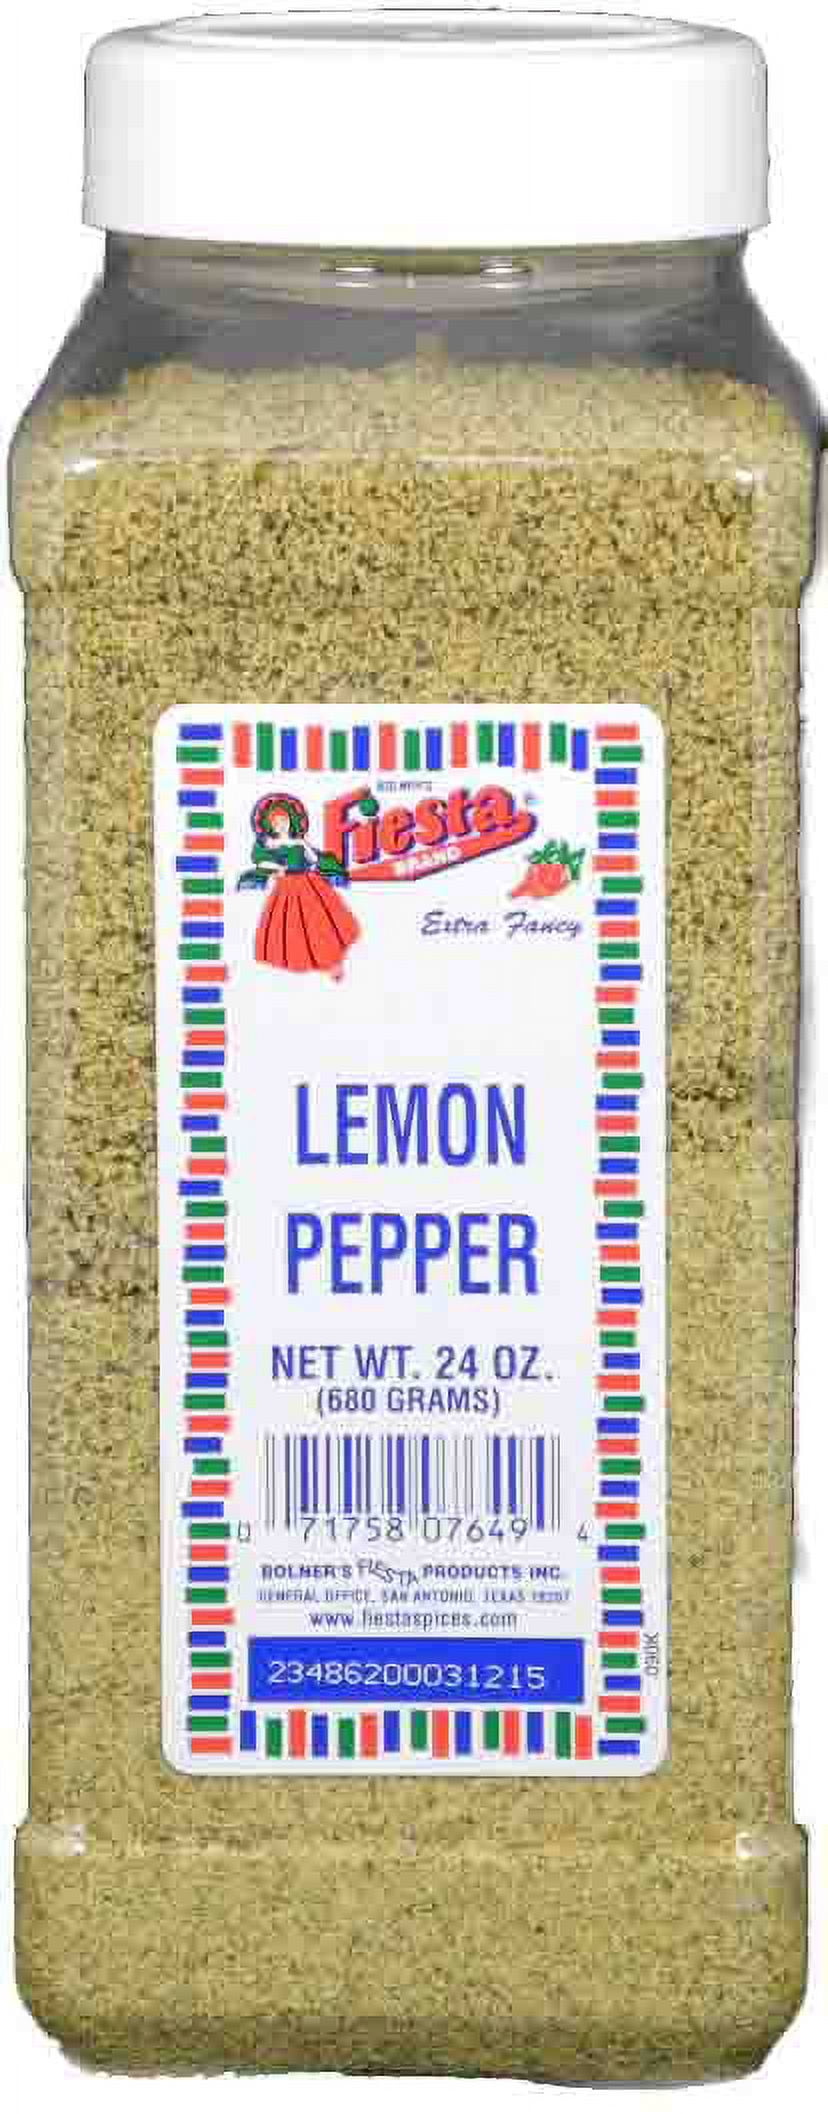 Bolner's Fiesta Lemon & Herb Seasoning with Butter Flavor - Shop